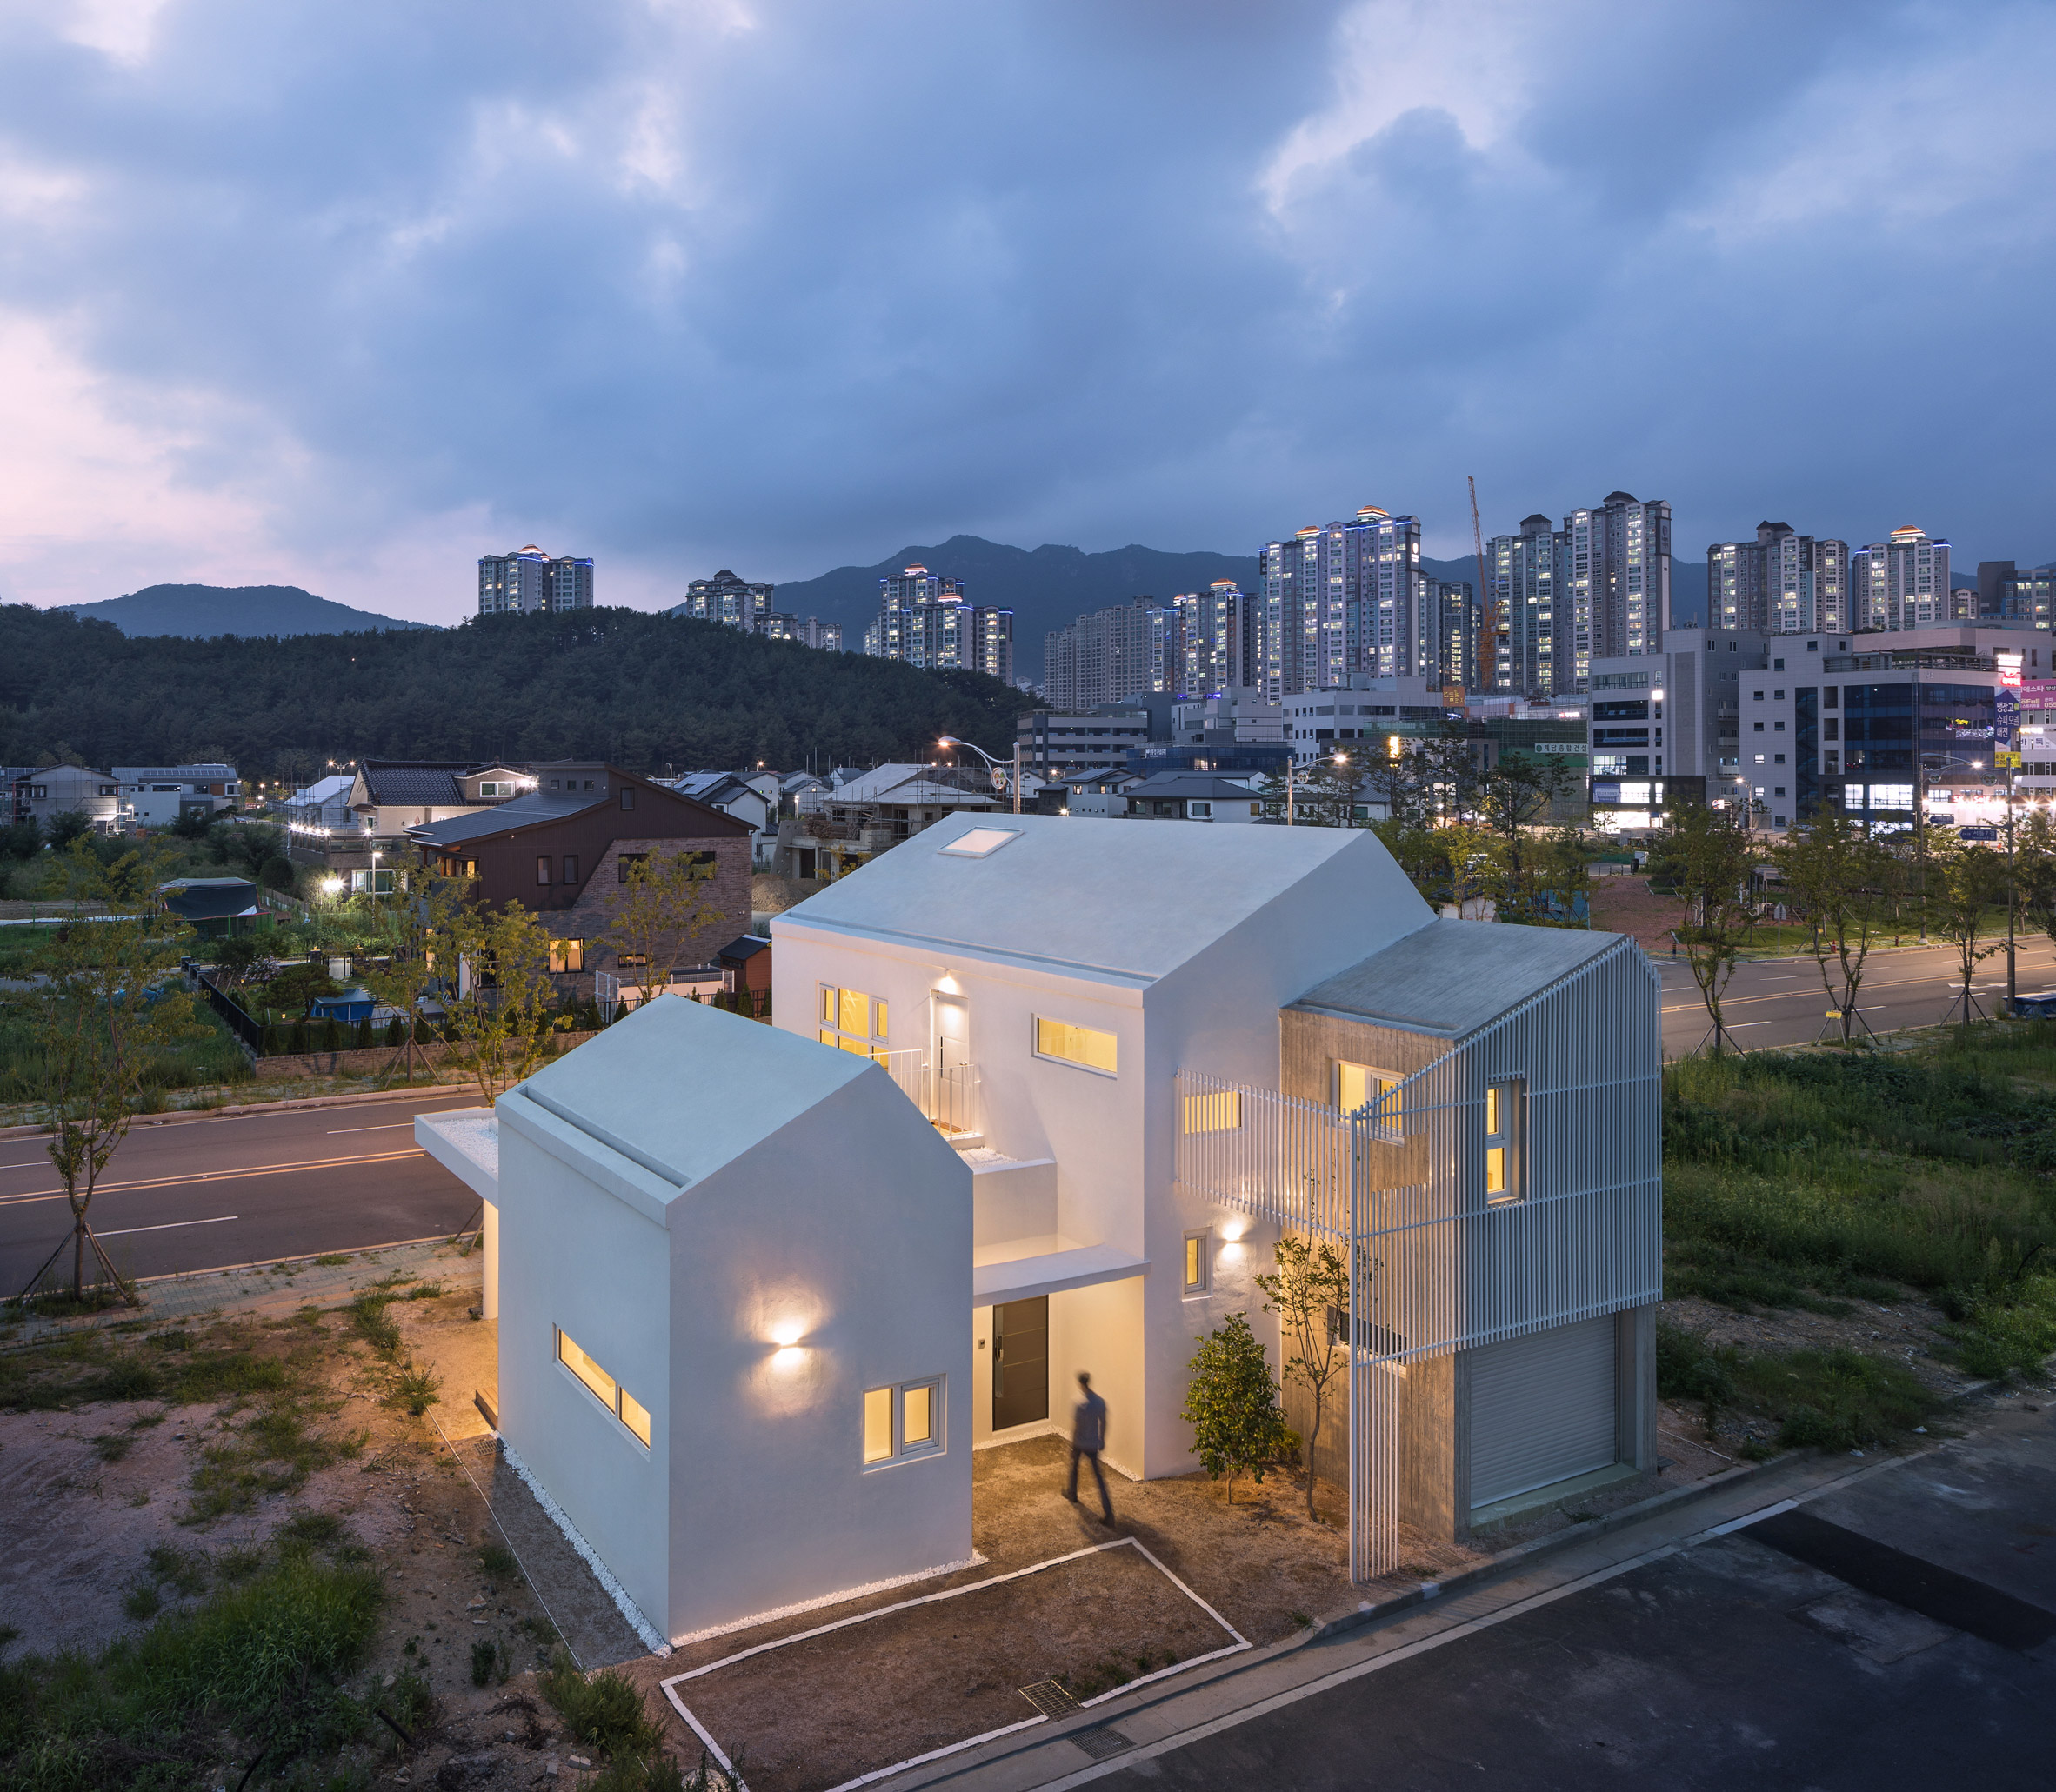 yangsan-eorinjip-raum-architecture-residential-south-koreadezeen2364col3-1582509930983989571061.jpg